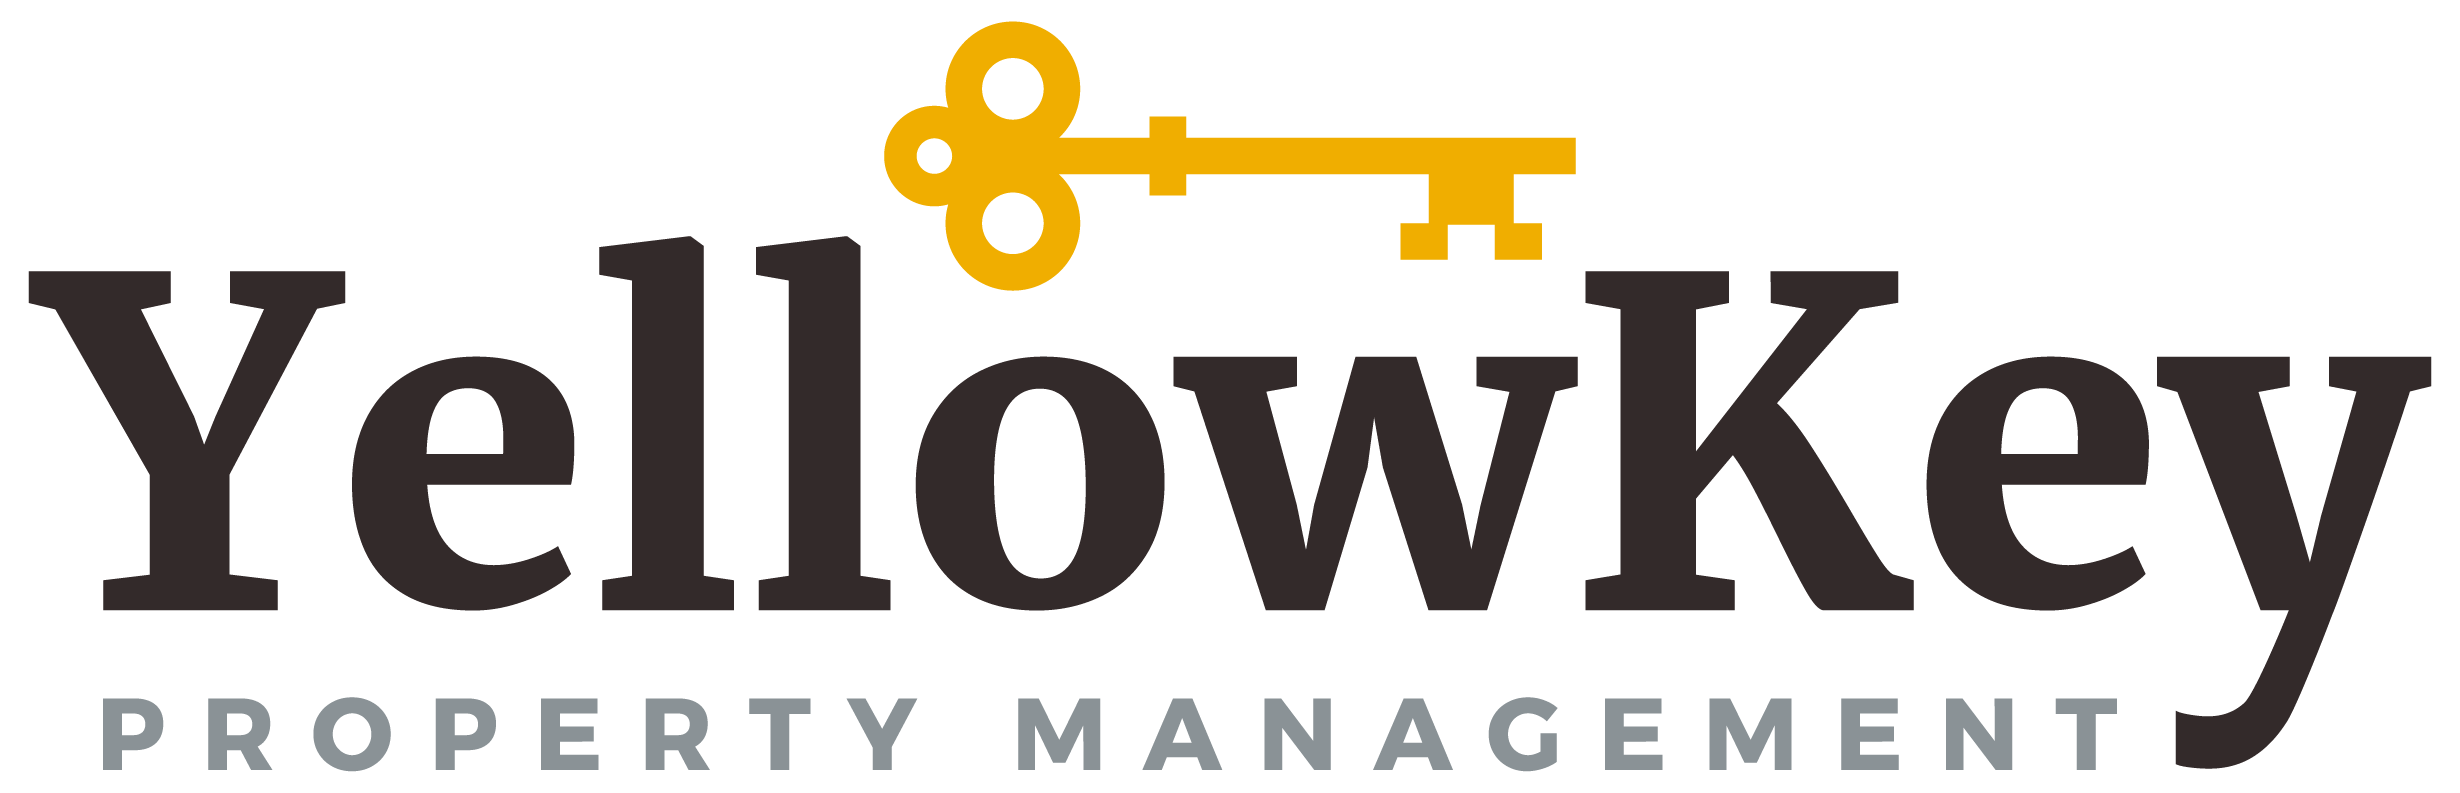 Yellow Key Property Management